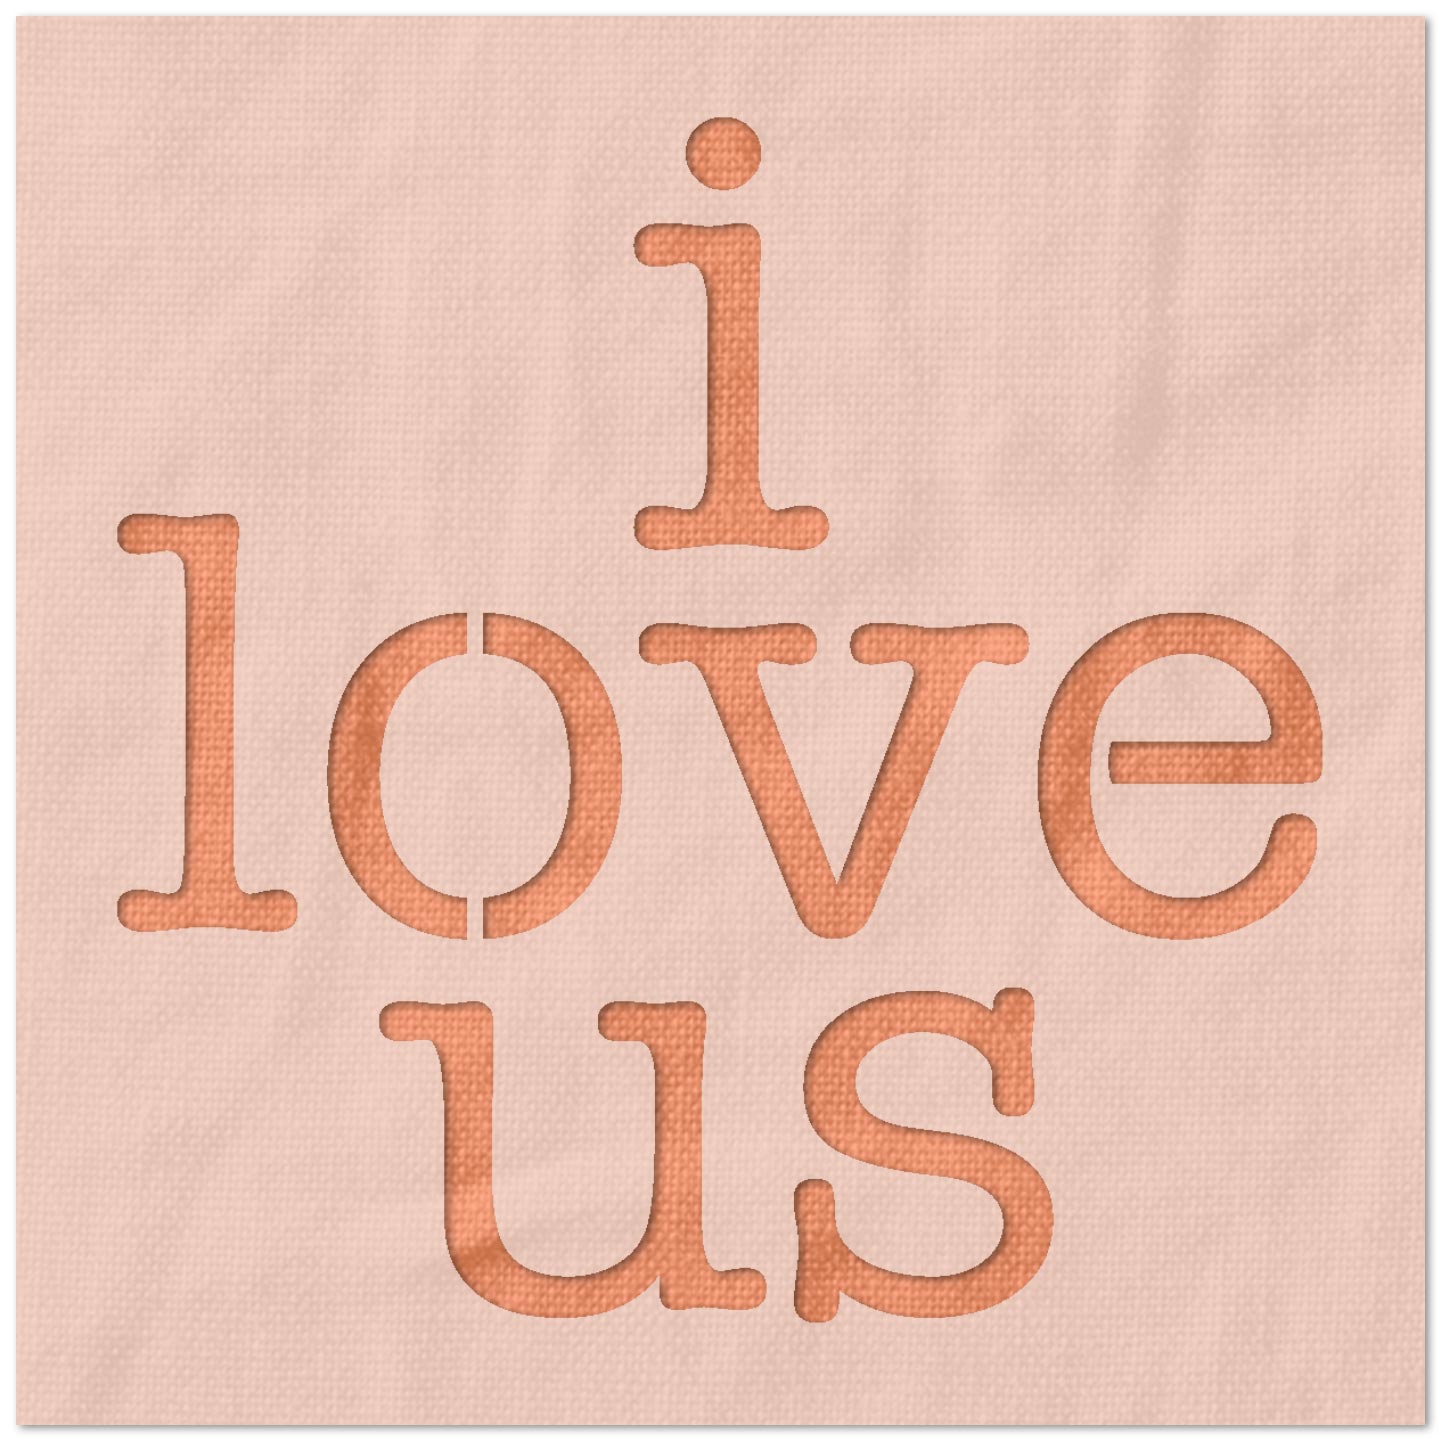 i love us - Stencil